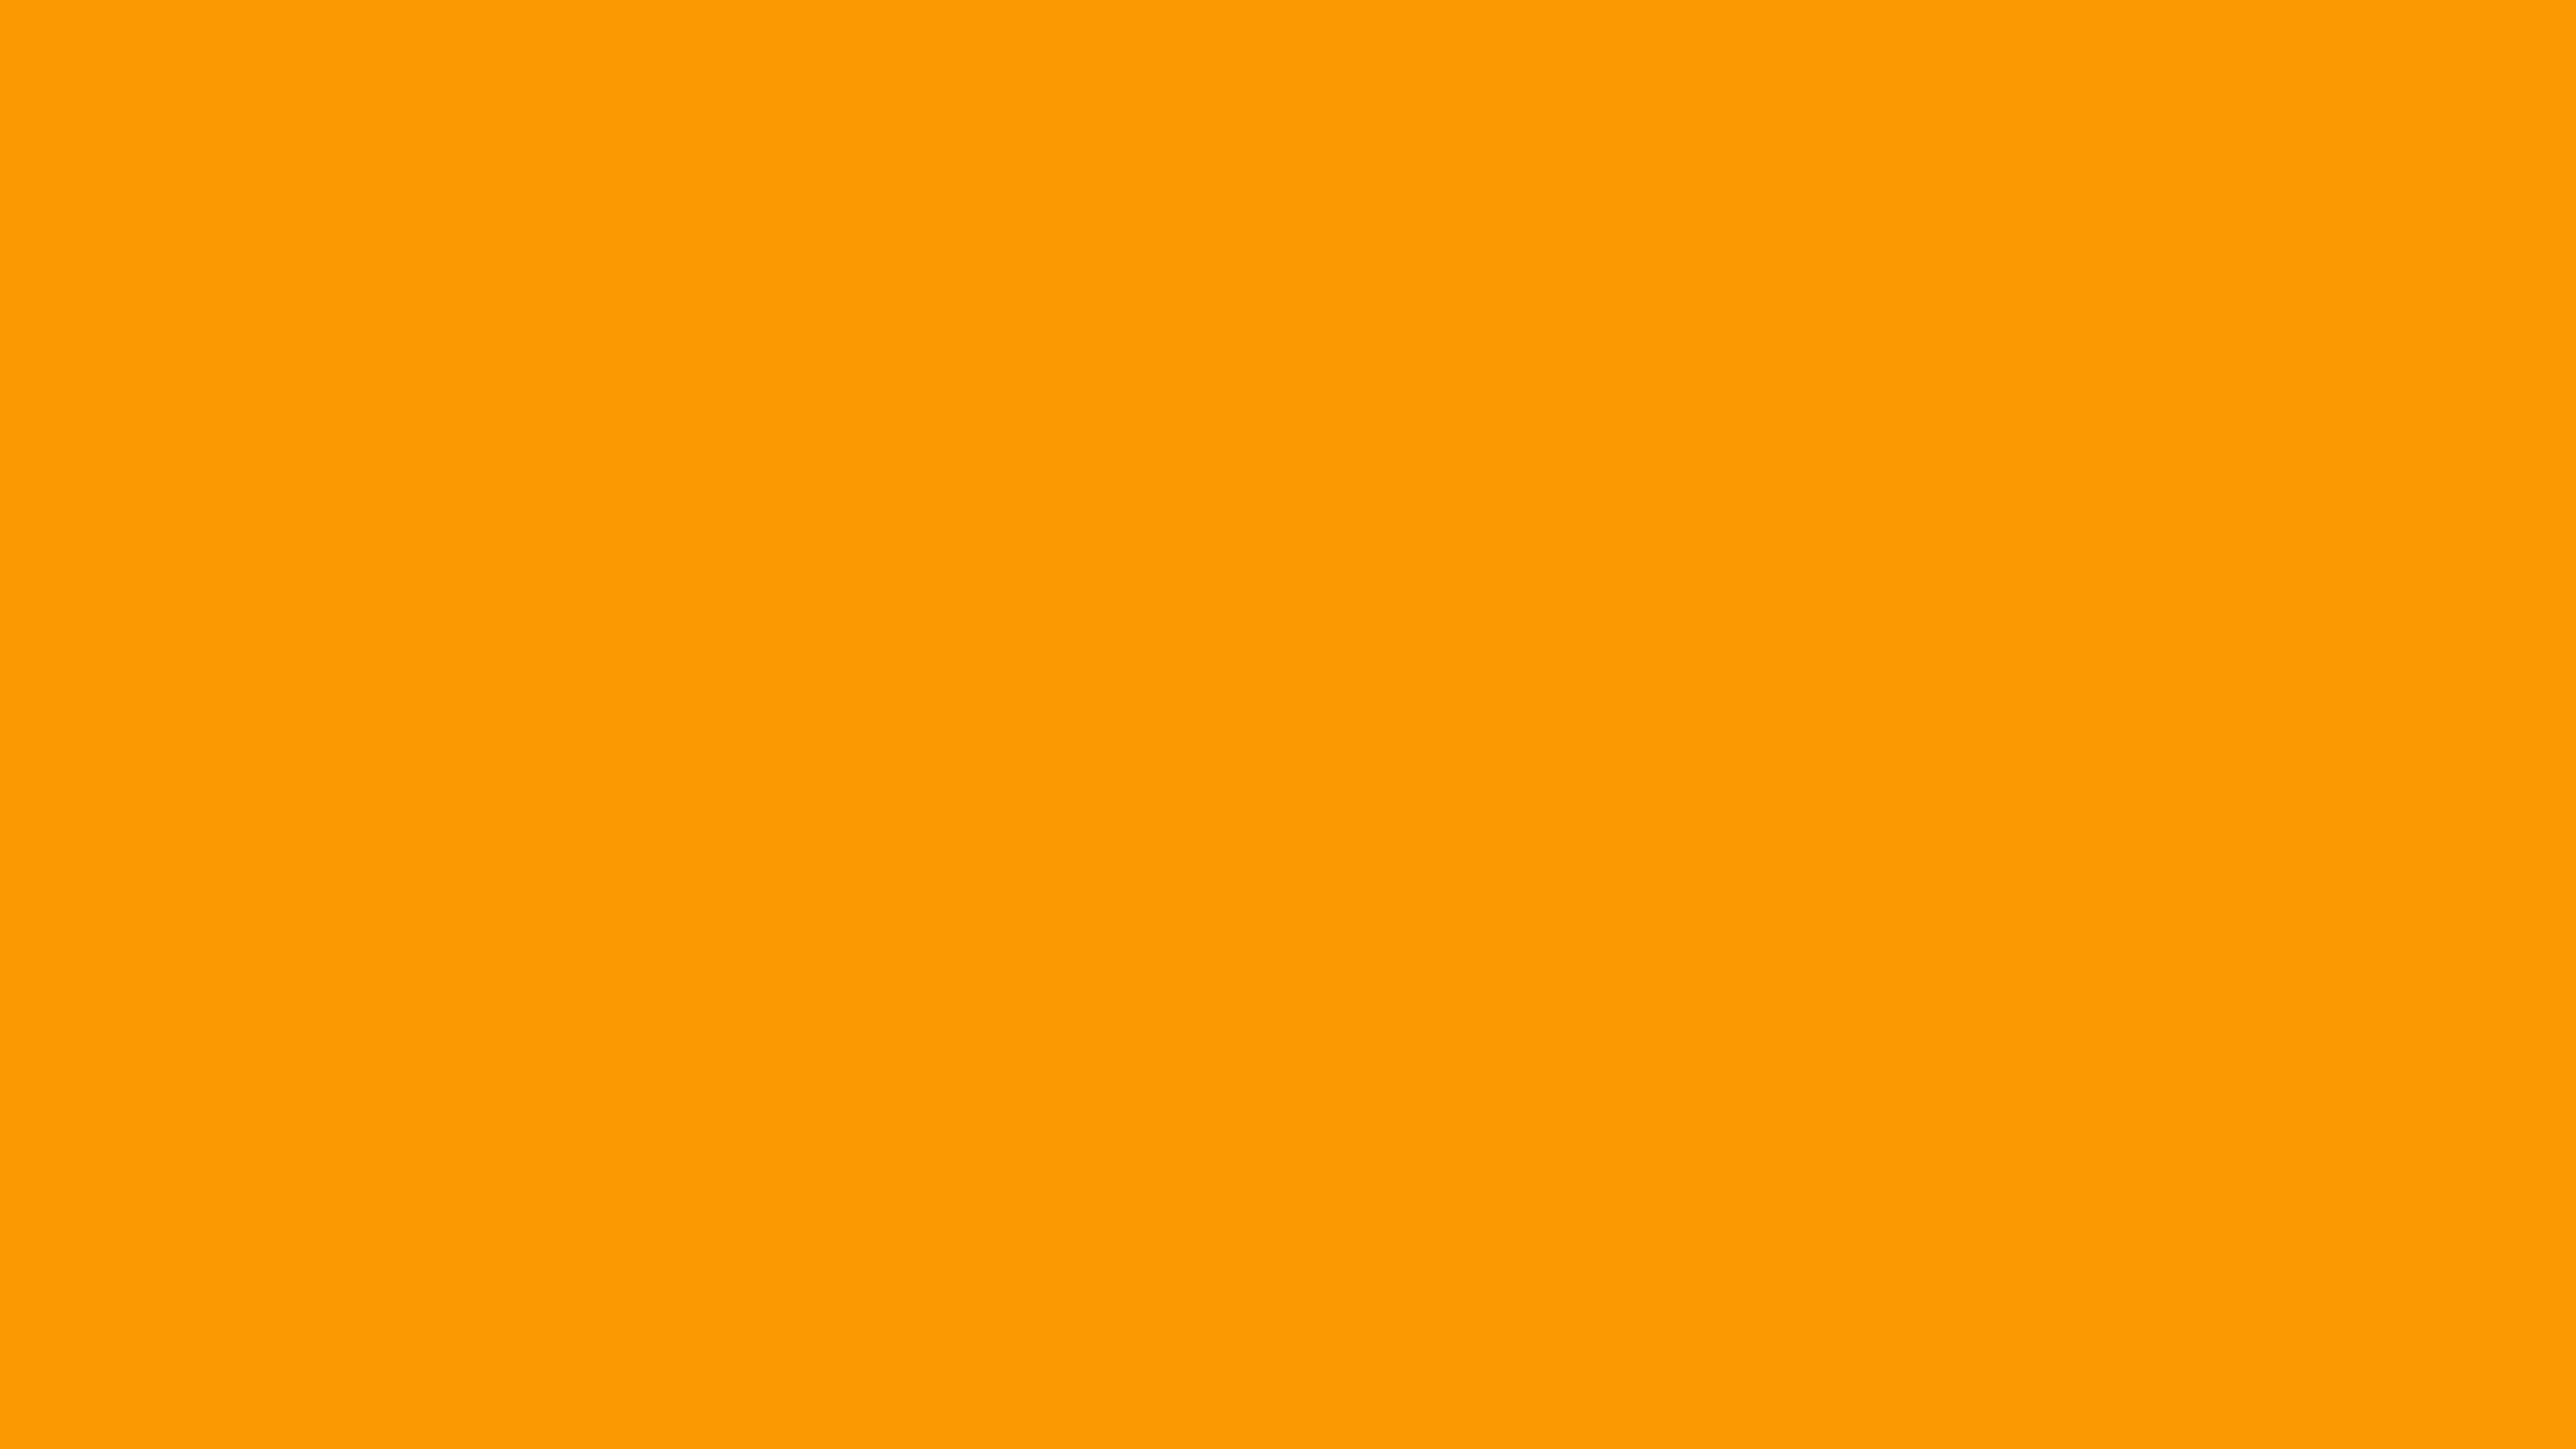 3840x2160 Orange RYB Solid Color Background